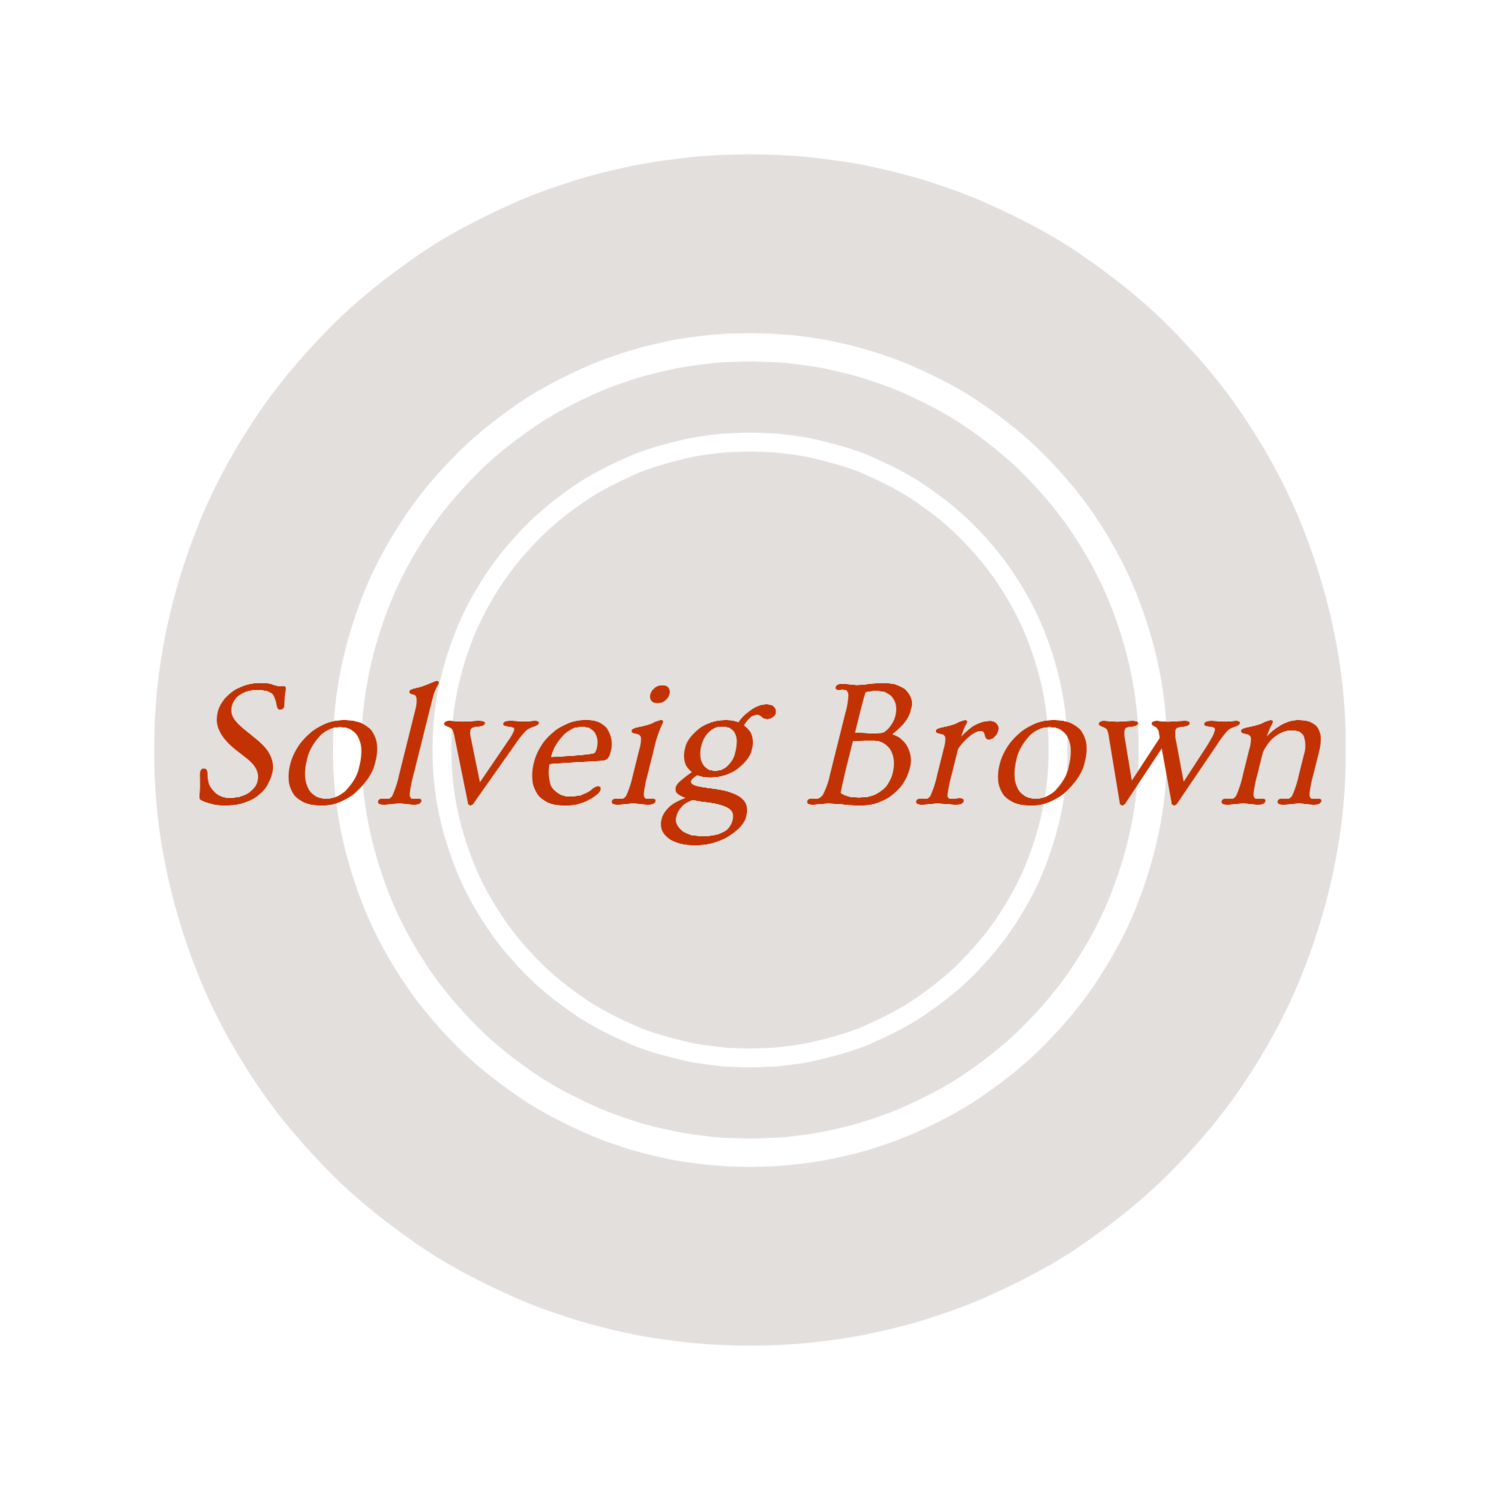 Solveig Brown